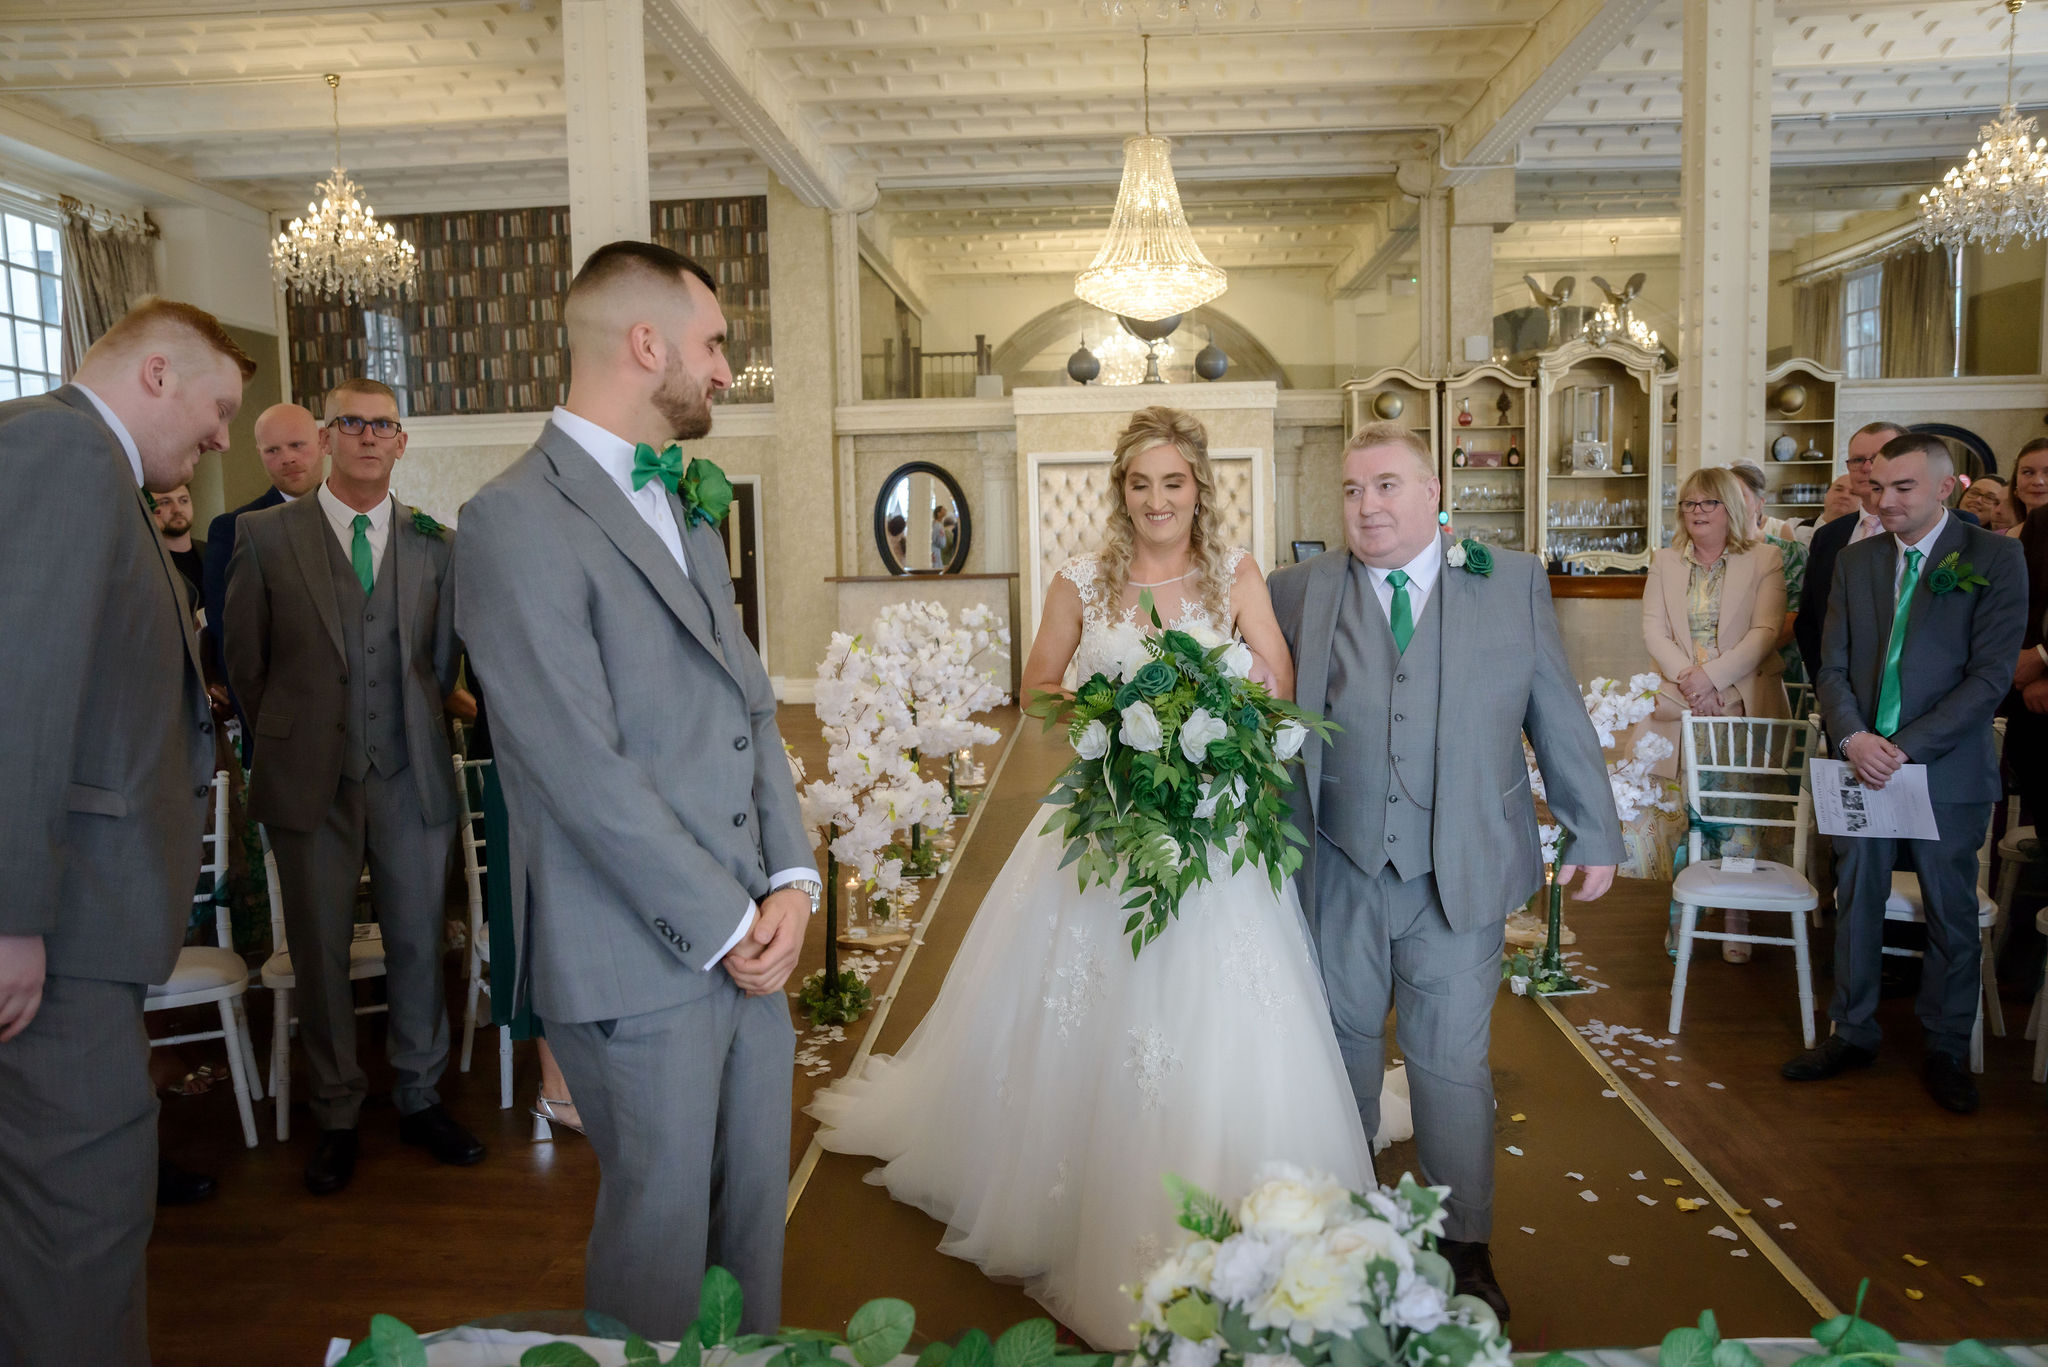 Liverpool wedding magic: emotional bride walks down aisle with proud dad to meet groom. #LiverpoolWedding #WeddingPhotography